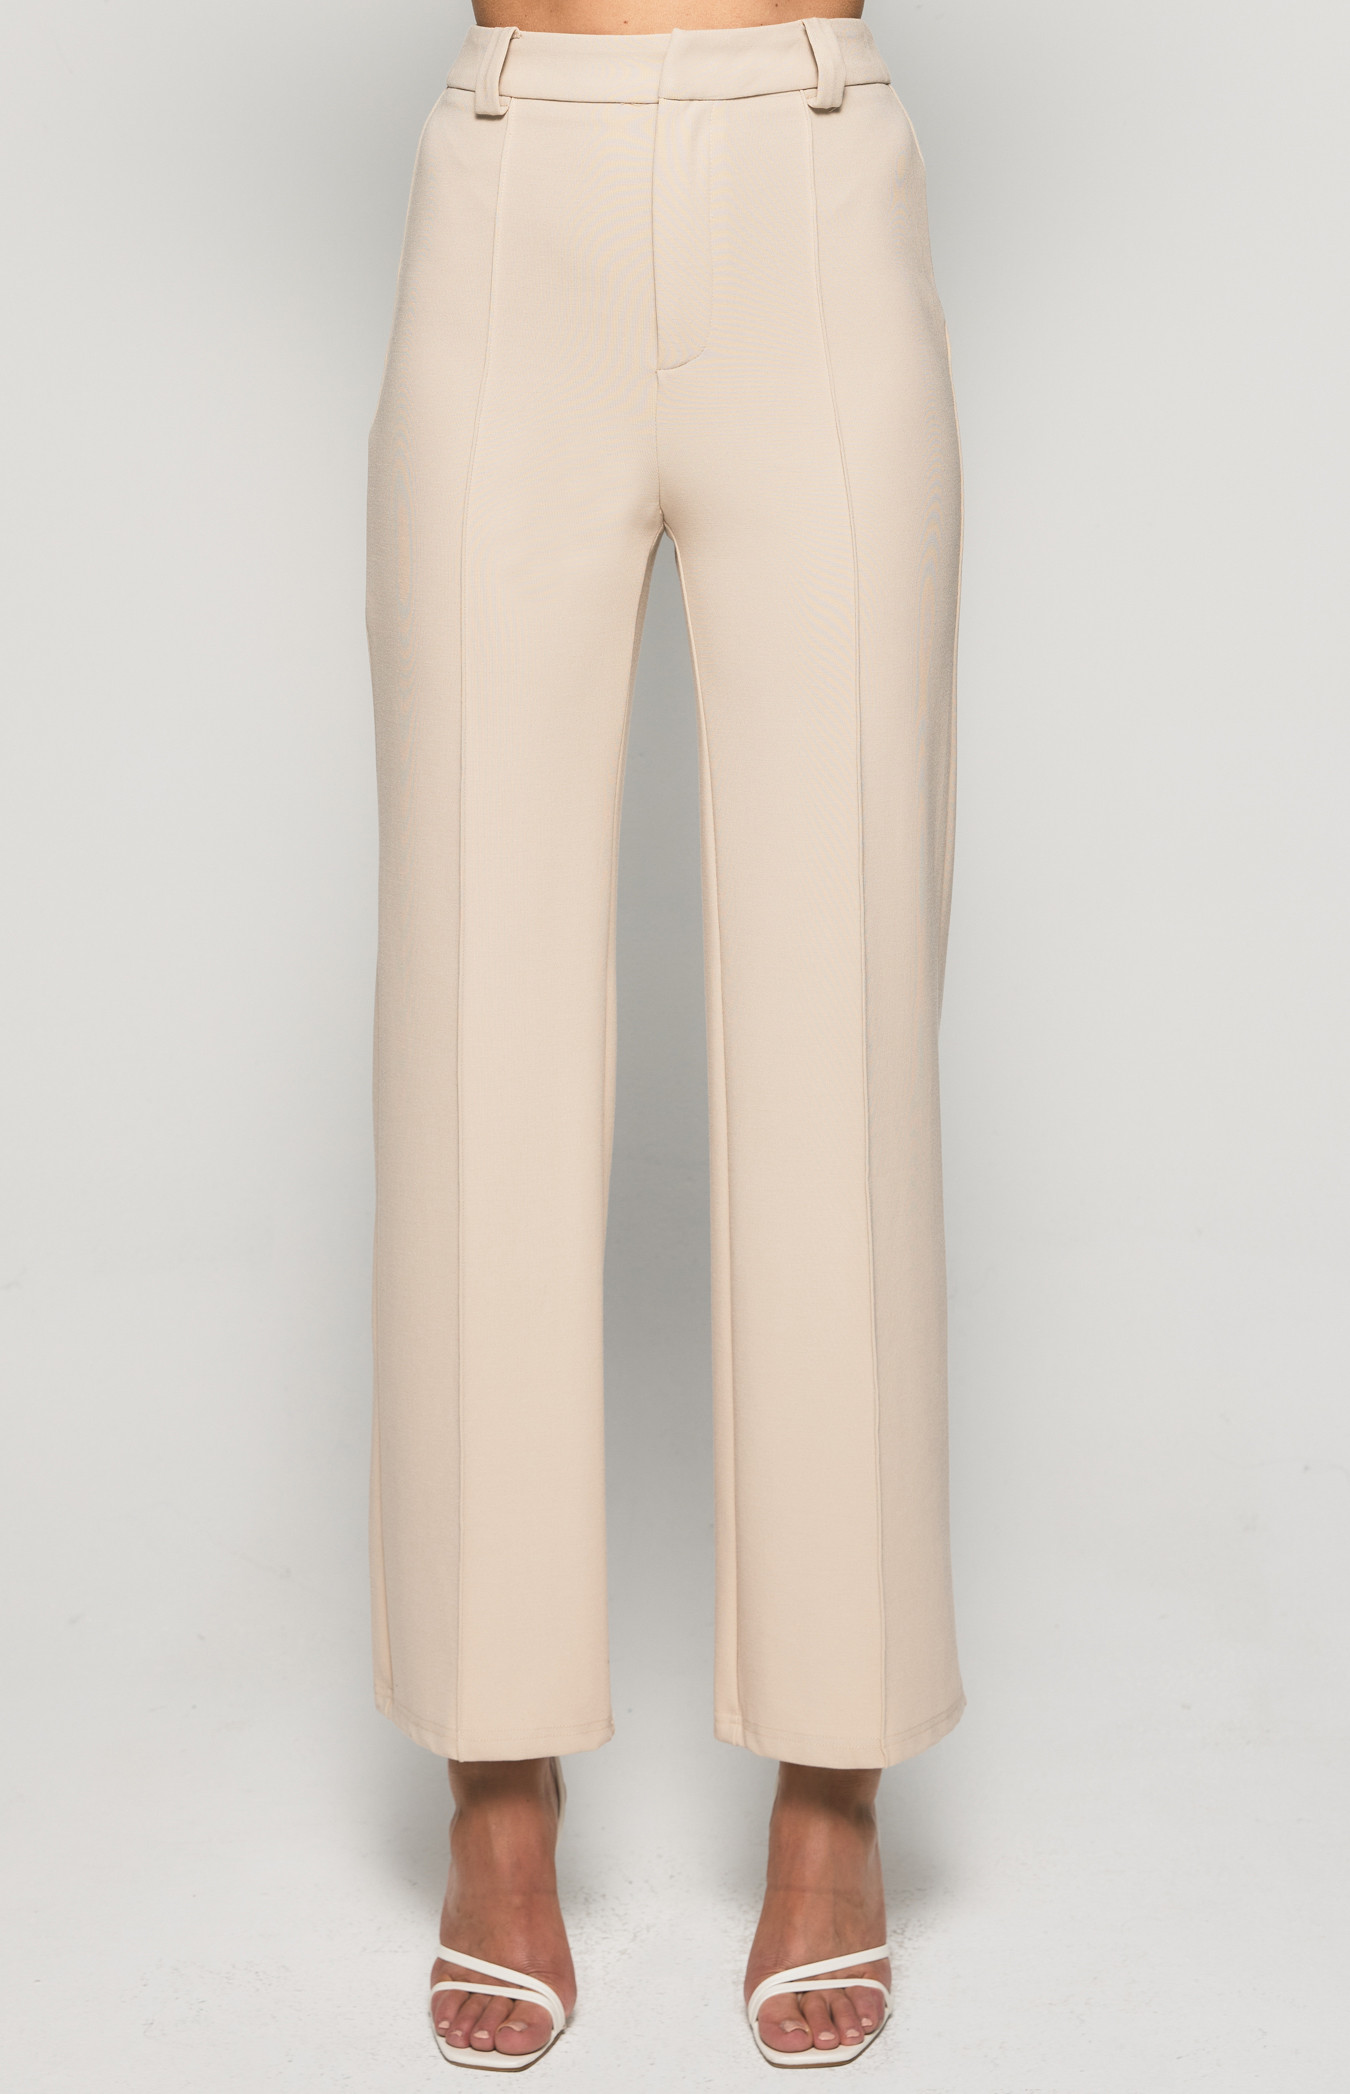 Stretch Fabric High Waisted Wide Leg Pants (SPA416B)